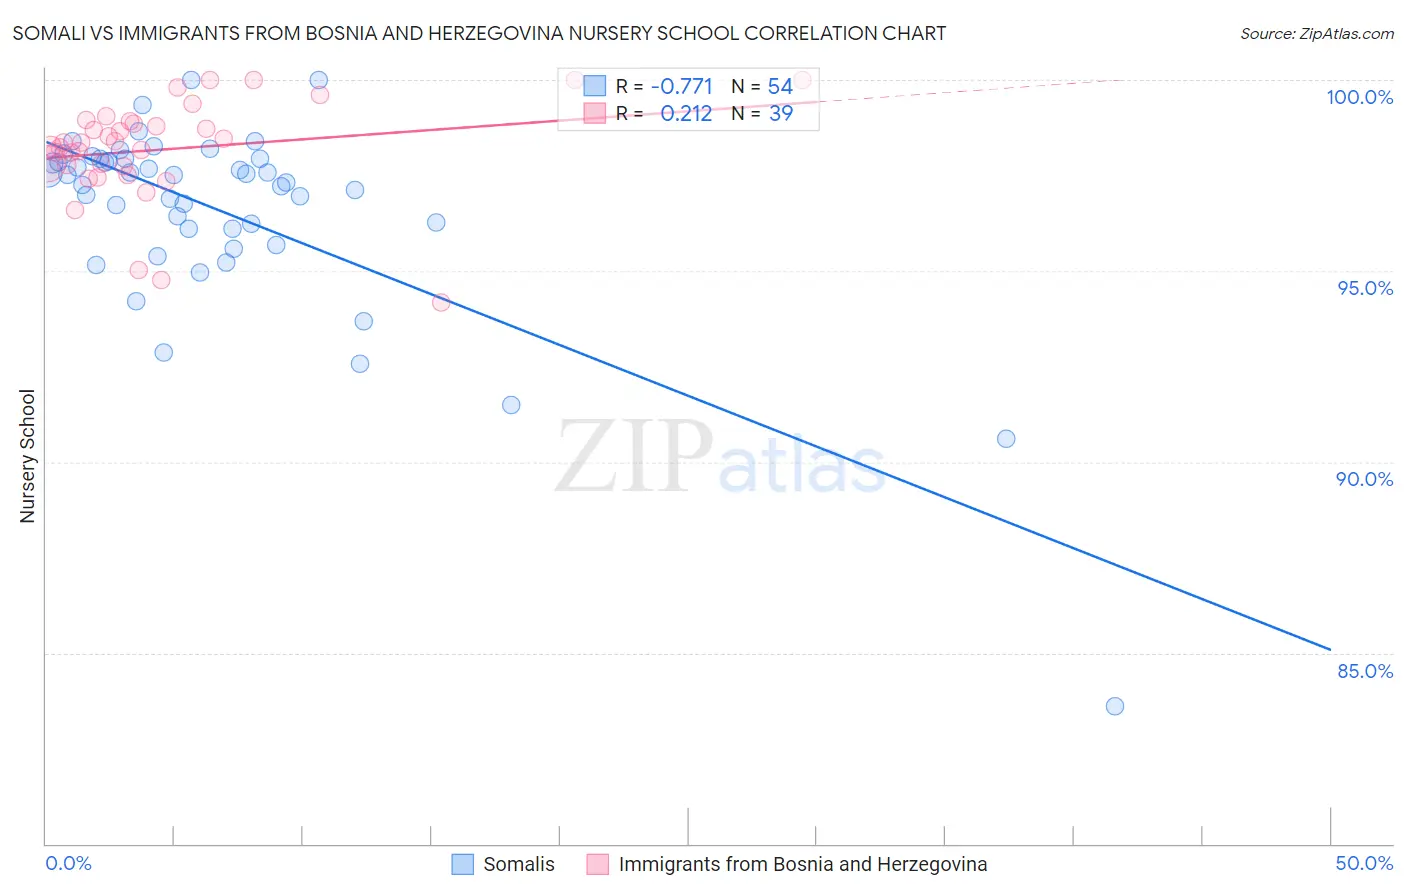 Somali vs Immigrants from Bosnia and Herzegovina Nursery School